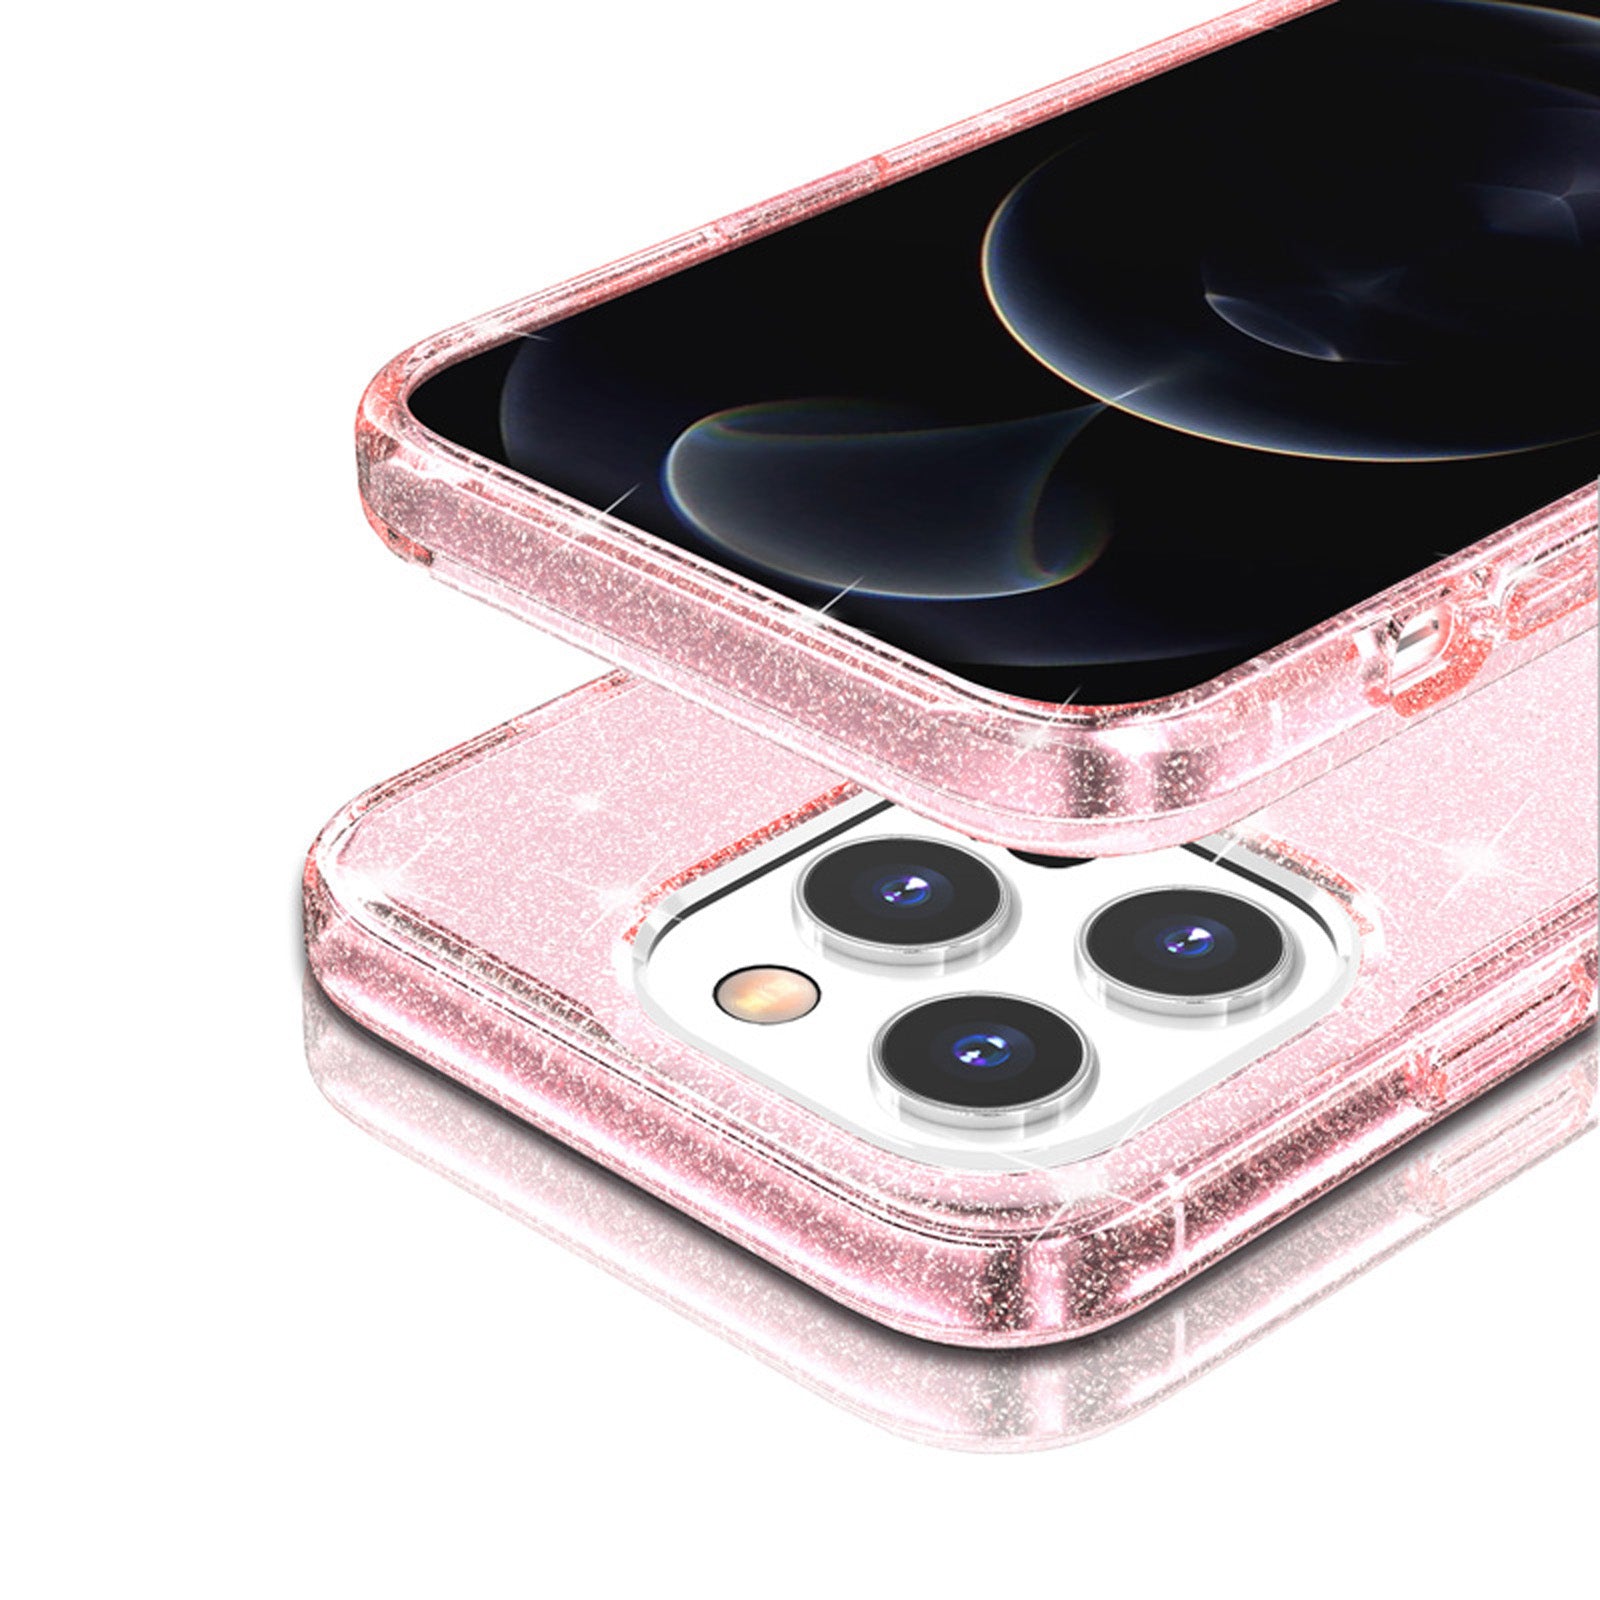 Uniqkart for iPhone 15 Pro Max Sparkly Glitter Protective Case Hard PC + Soft TPU Anti-scratch Phone Cover - Pink